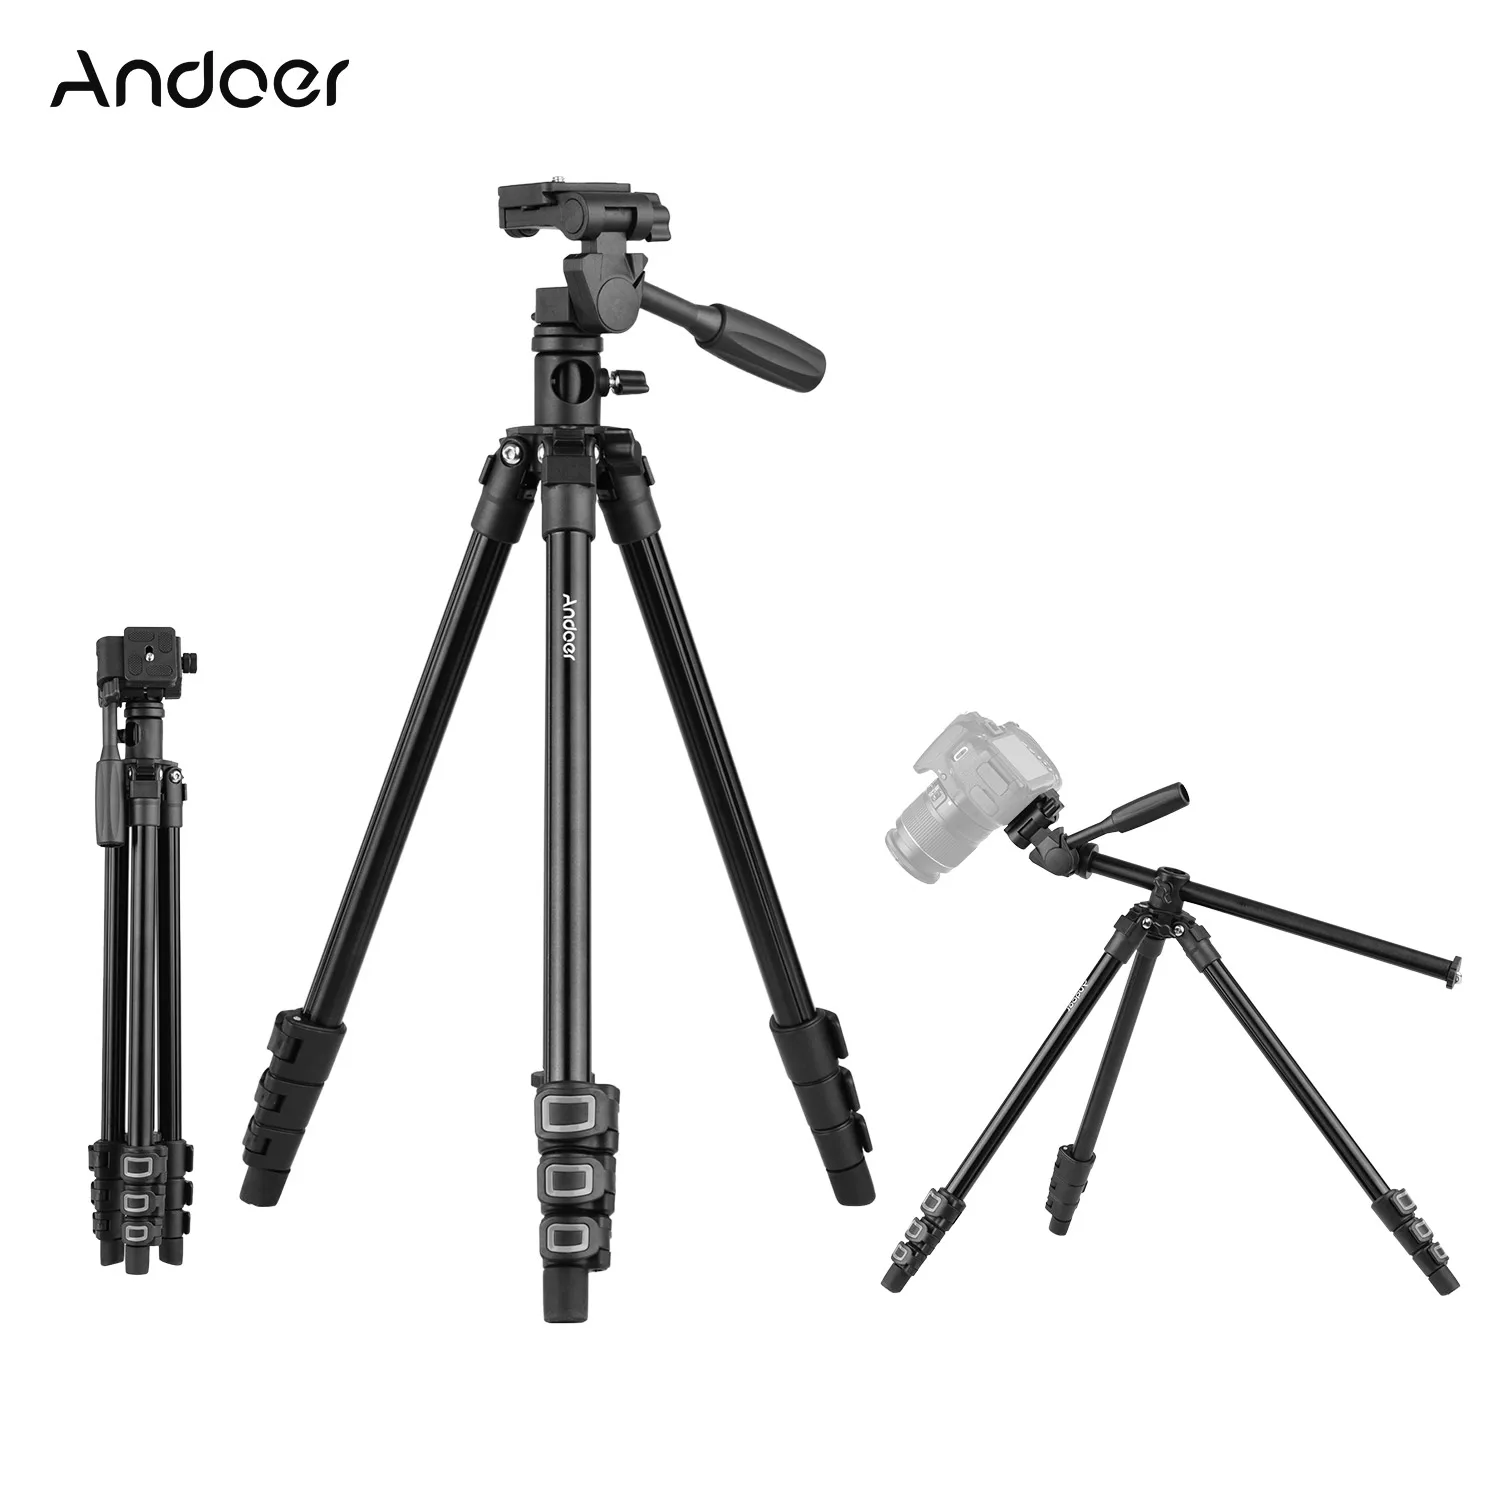 

Andoer Q160HA Video Tripod Mount Heavy Duty Camera Tripod 3-Way Pan&Tilt Head for DSLR Cameras Camcorders for Canon Nikon Sony